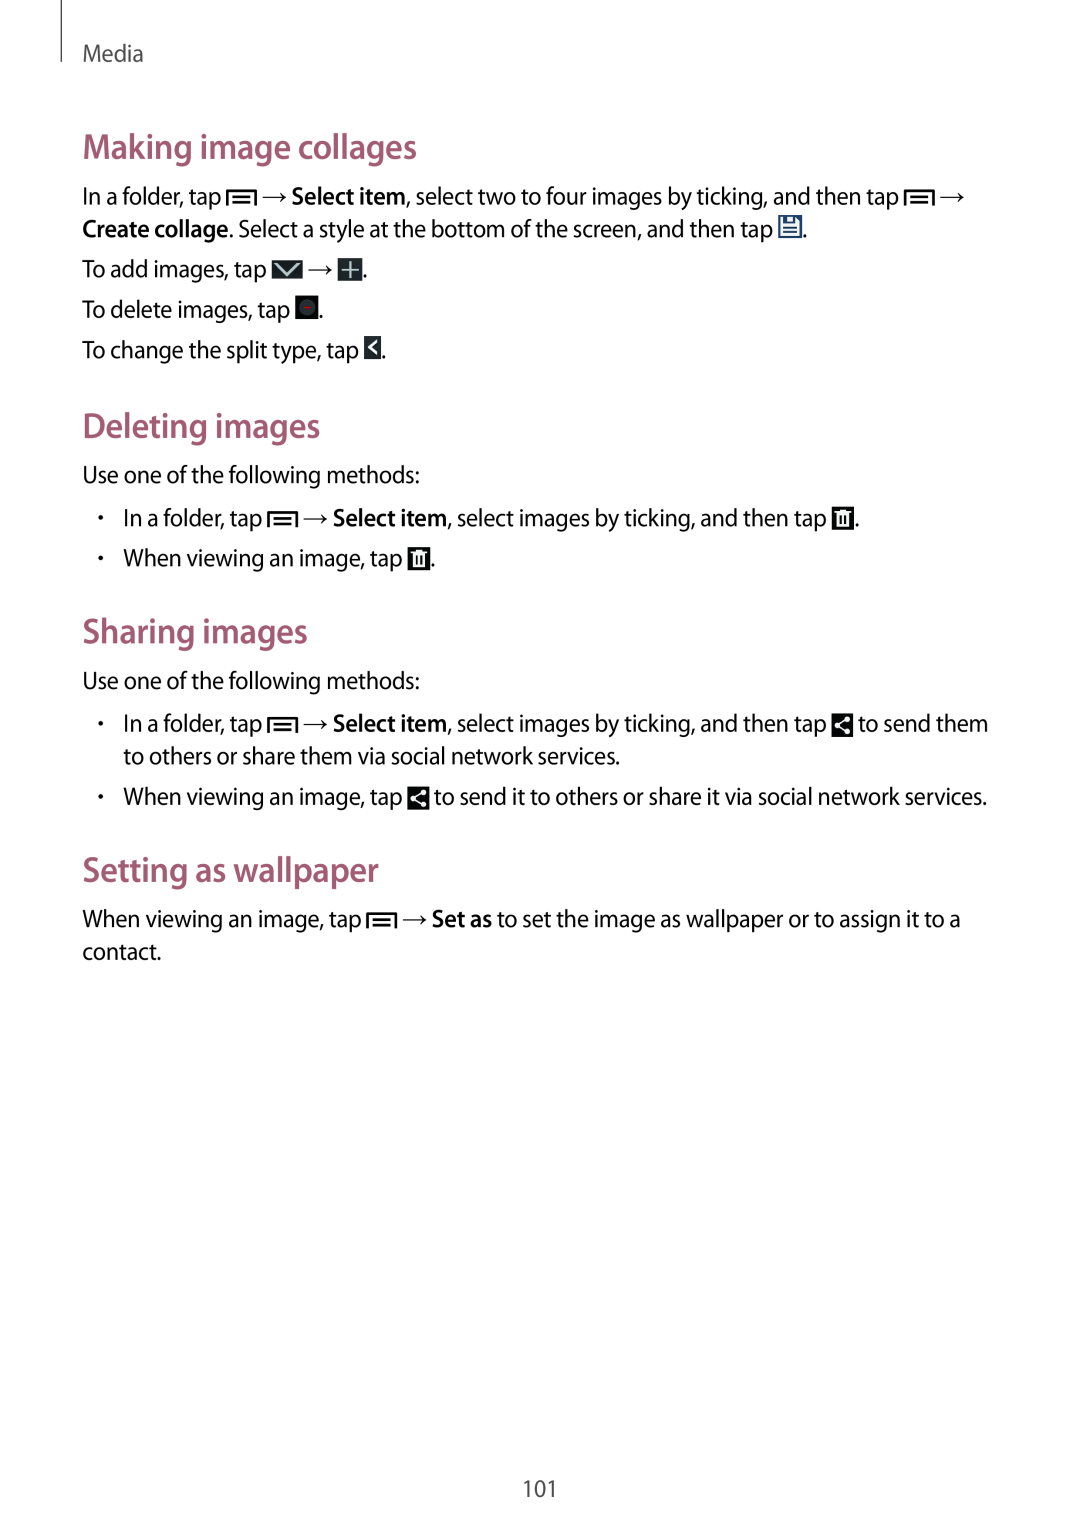 Samsung SM-N9005ZREKSA, SM-N9005ZKEEGY Making image collages, Deleting images, Sharing images, Setting as wallpaper, Media 